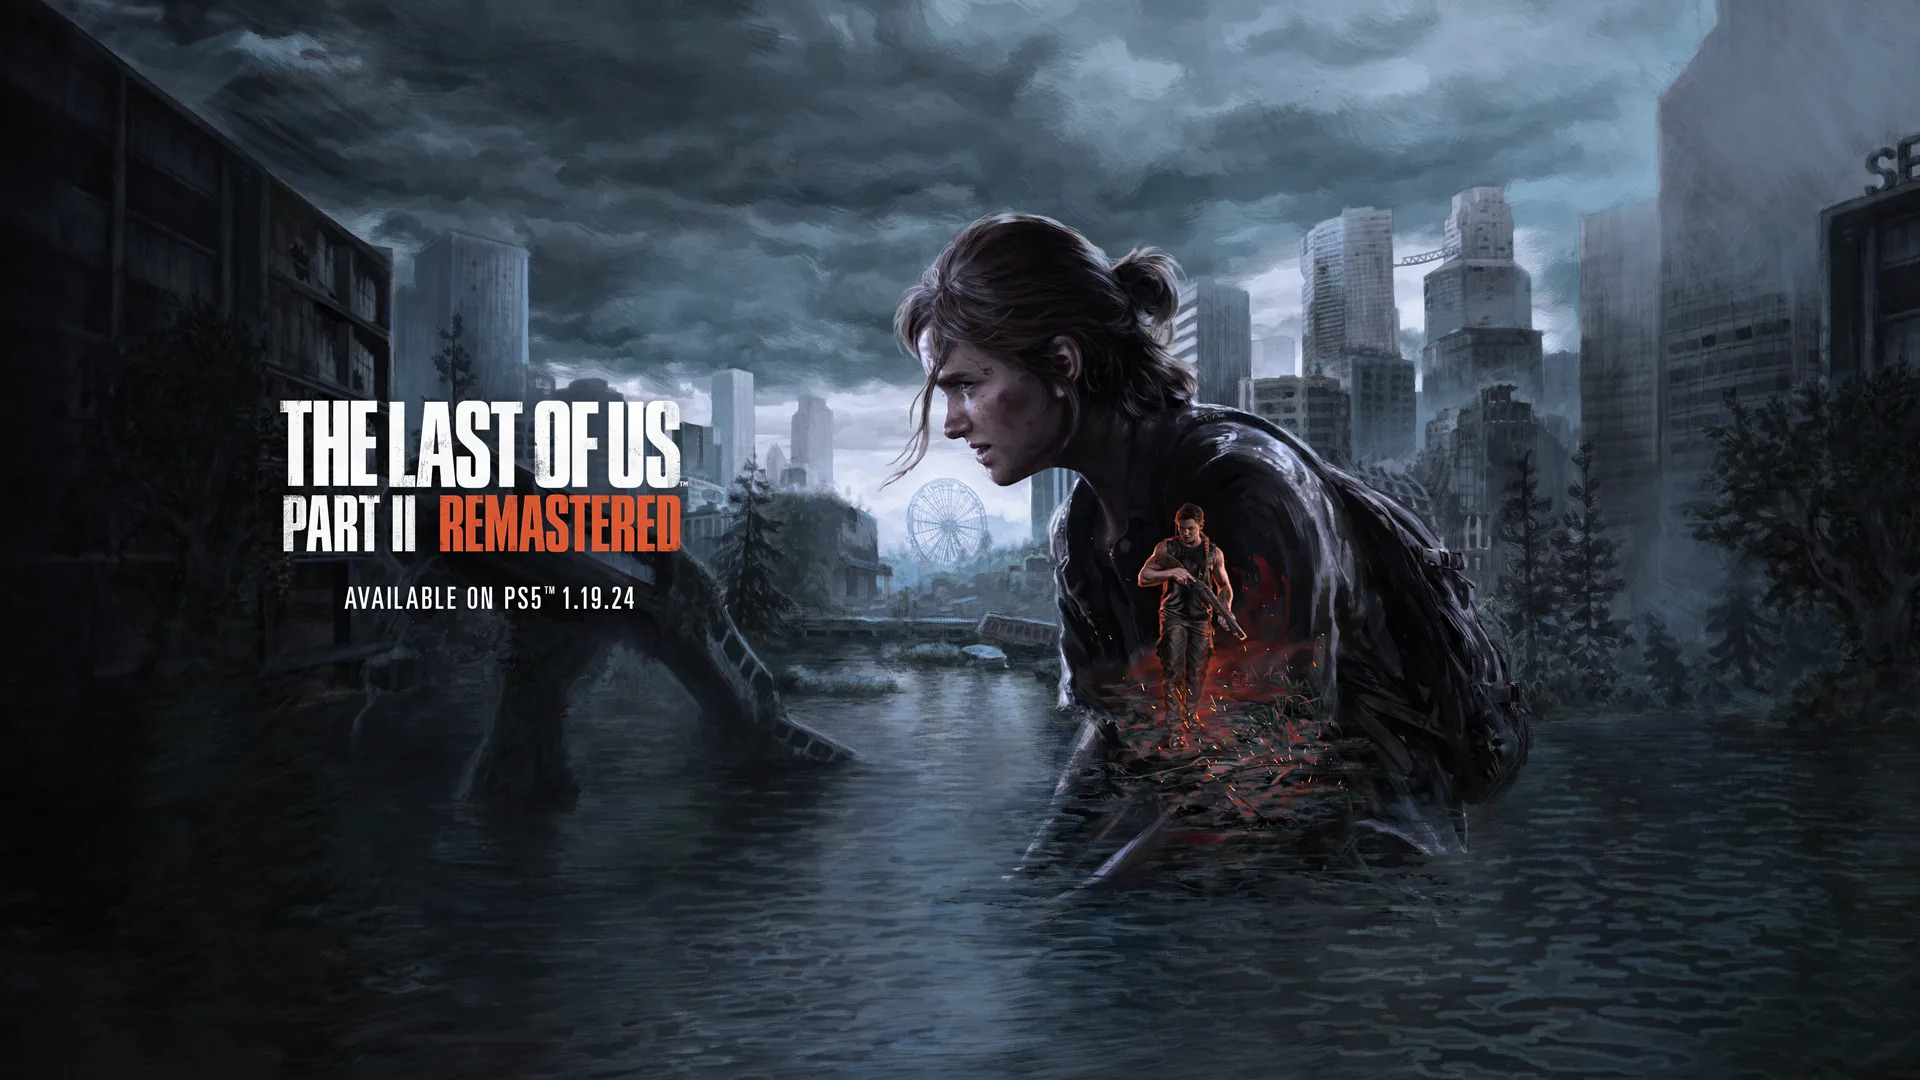 The Last of Us Part I - Gematsu